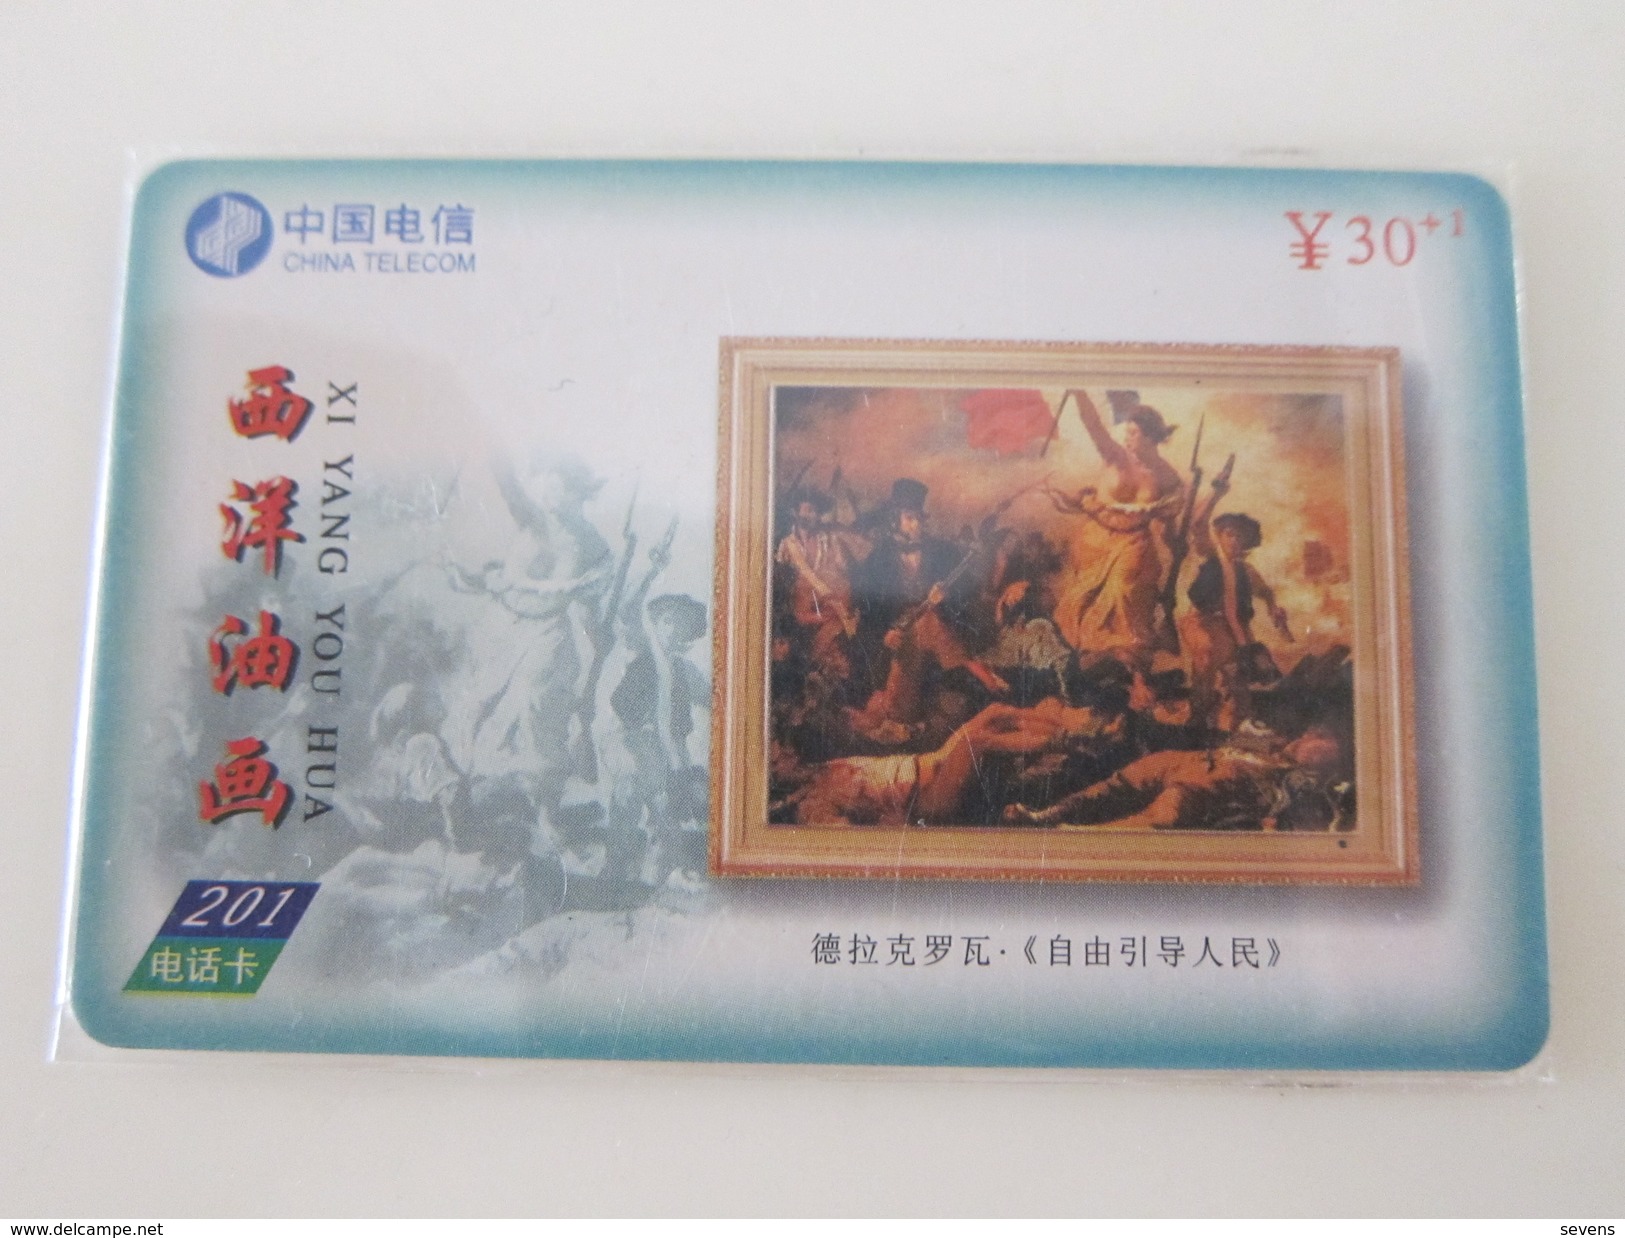 China Telecom Prepaid Phonecard,painting By Delacroix "La Liberté Guidant Le Peuple" ,used - China